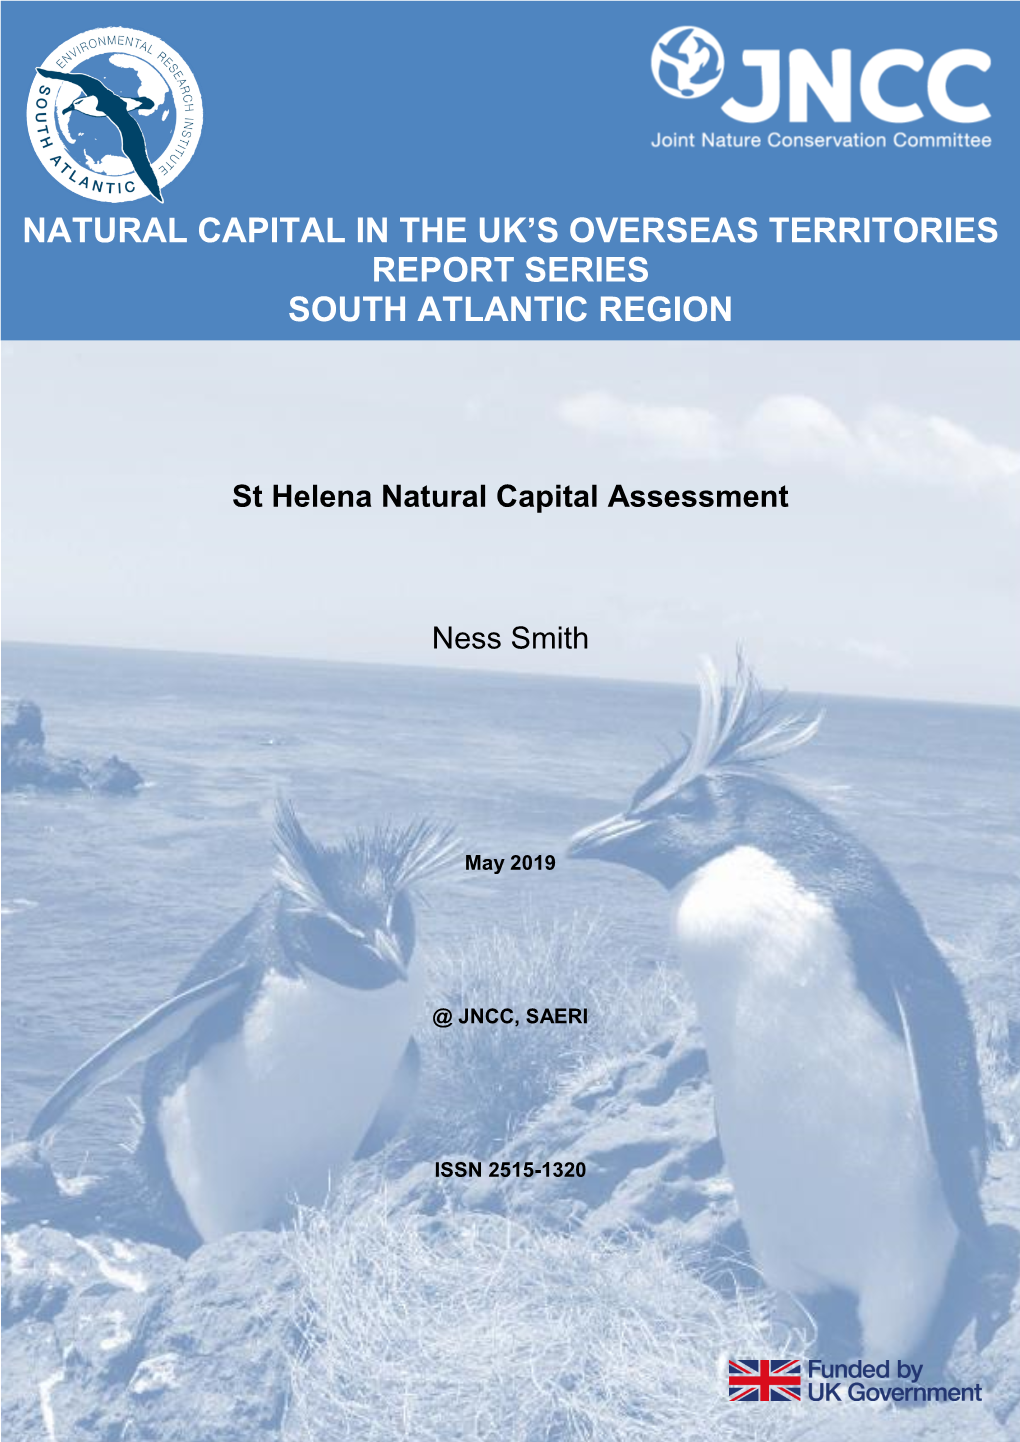 St Helena Natural Capital Assessment